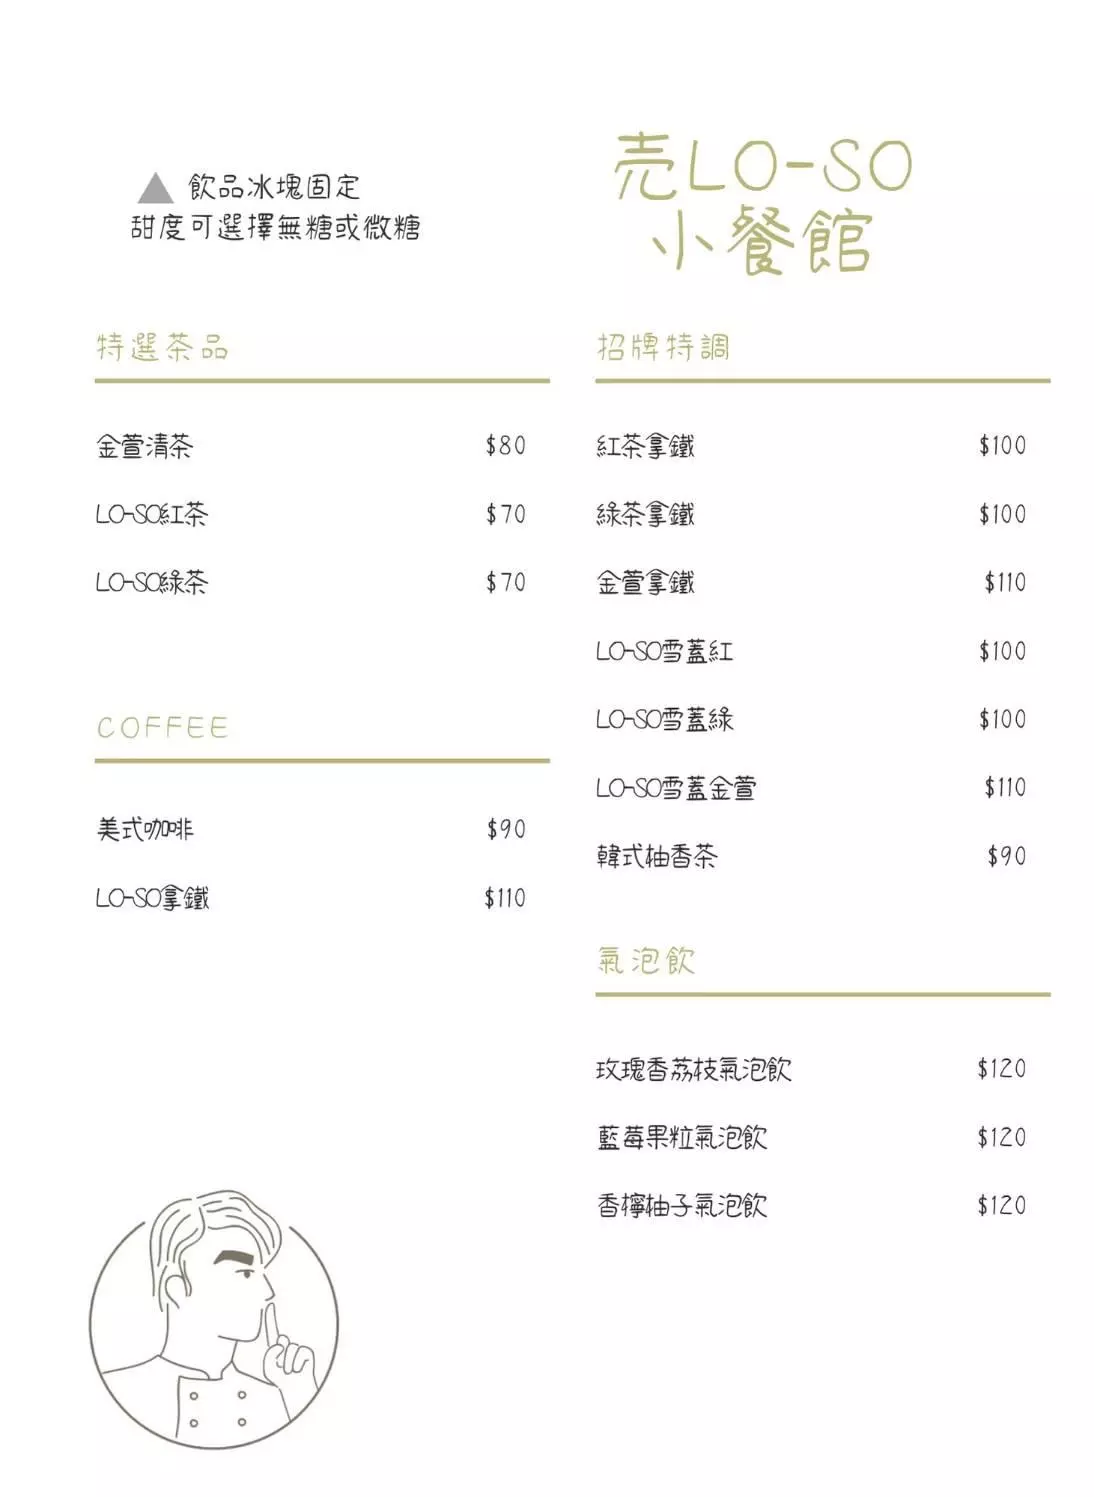 売LO-SO小餐館菜單